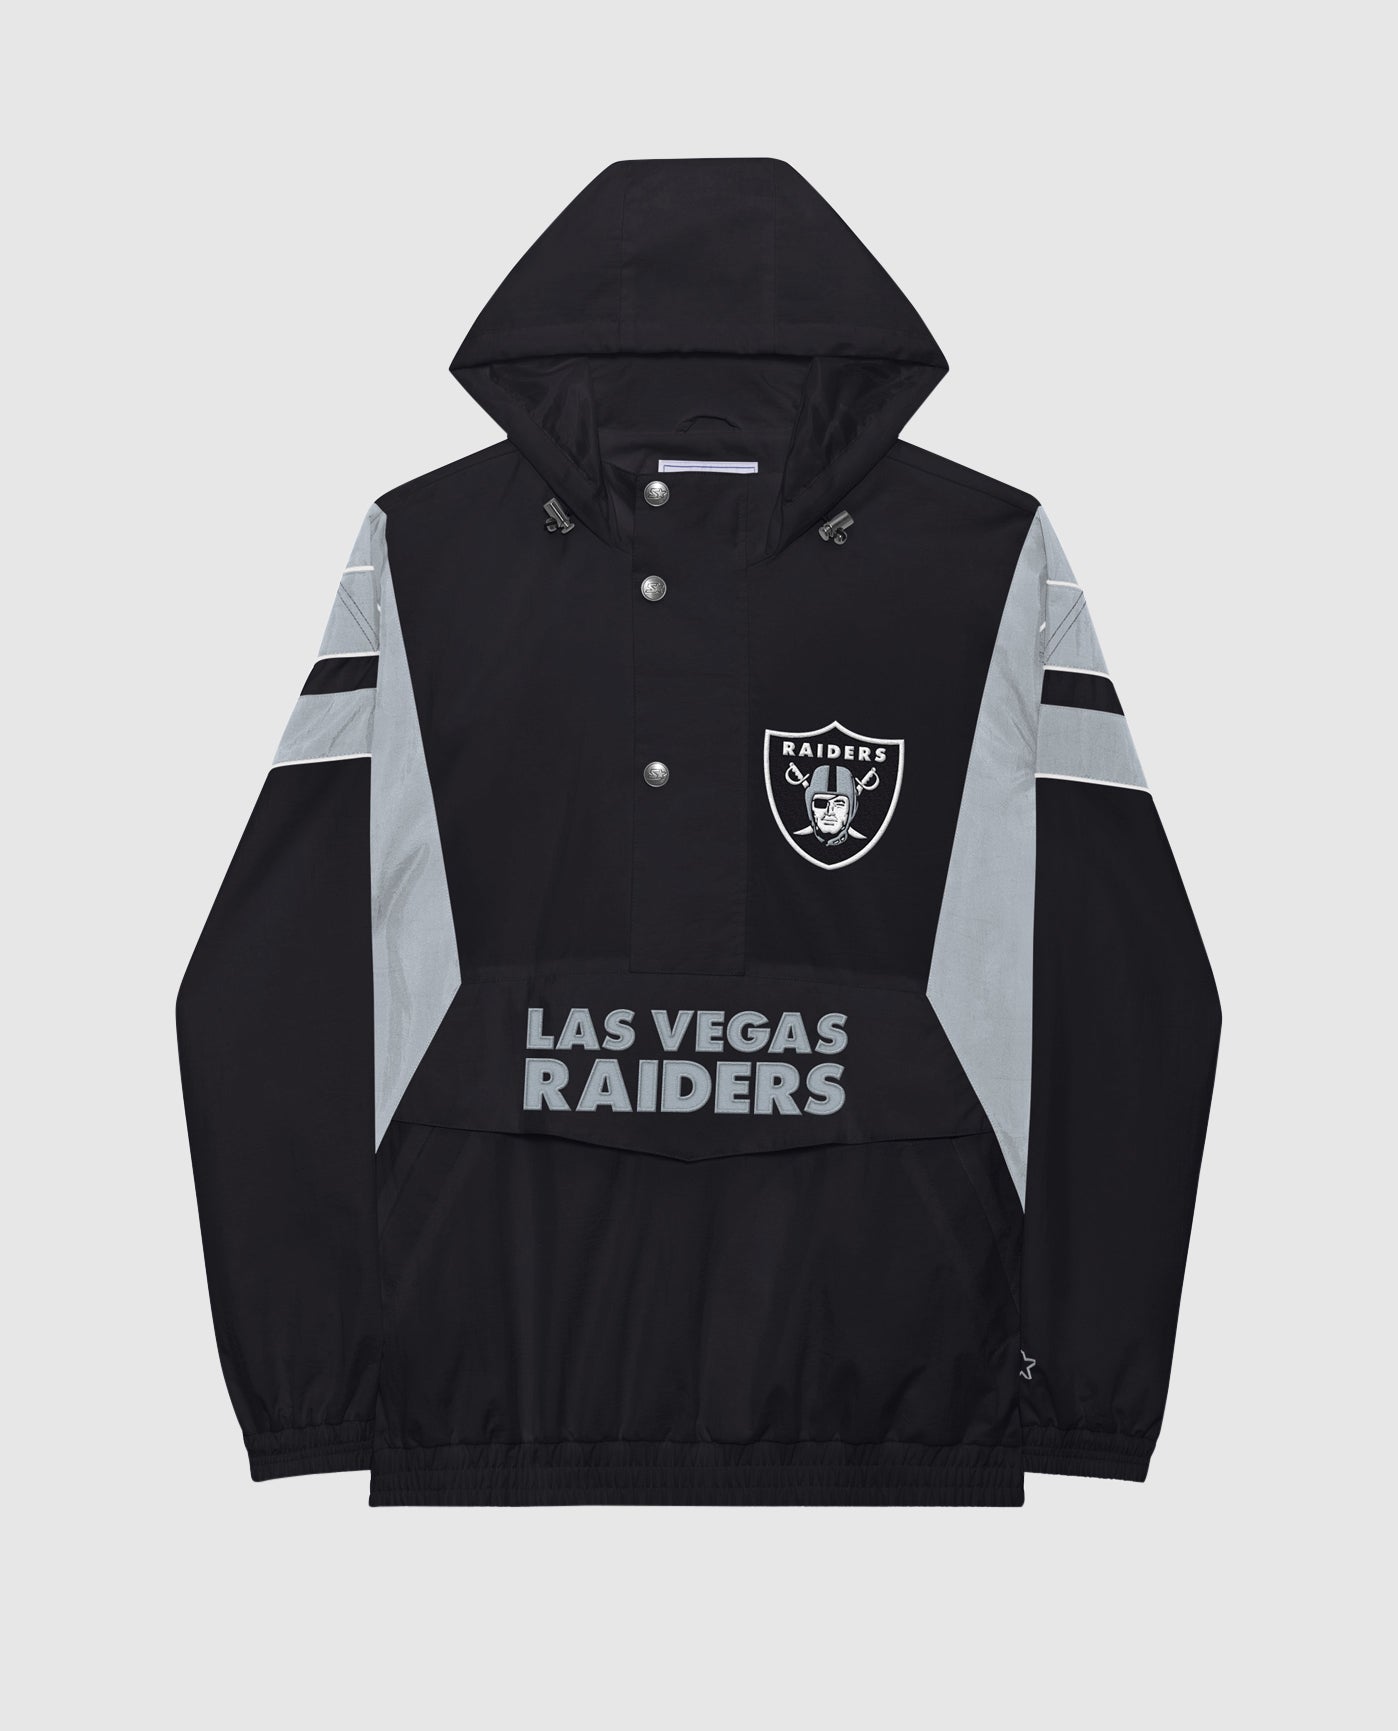 Starter Las Vegas Raiders Home Team Half-Zip Jacket XL / Black Mens Outerwear